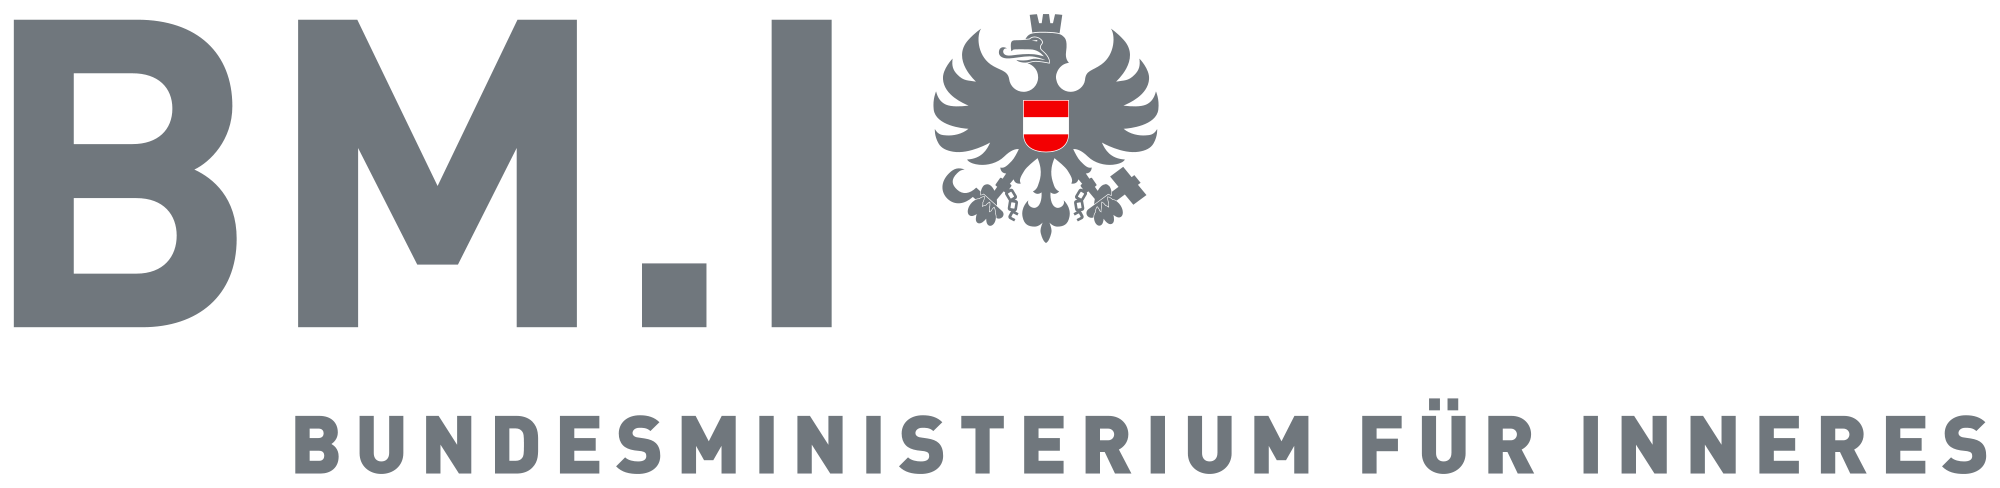 bundesministerium_fuer_inneres_logo_svg